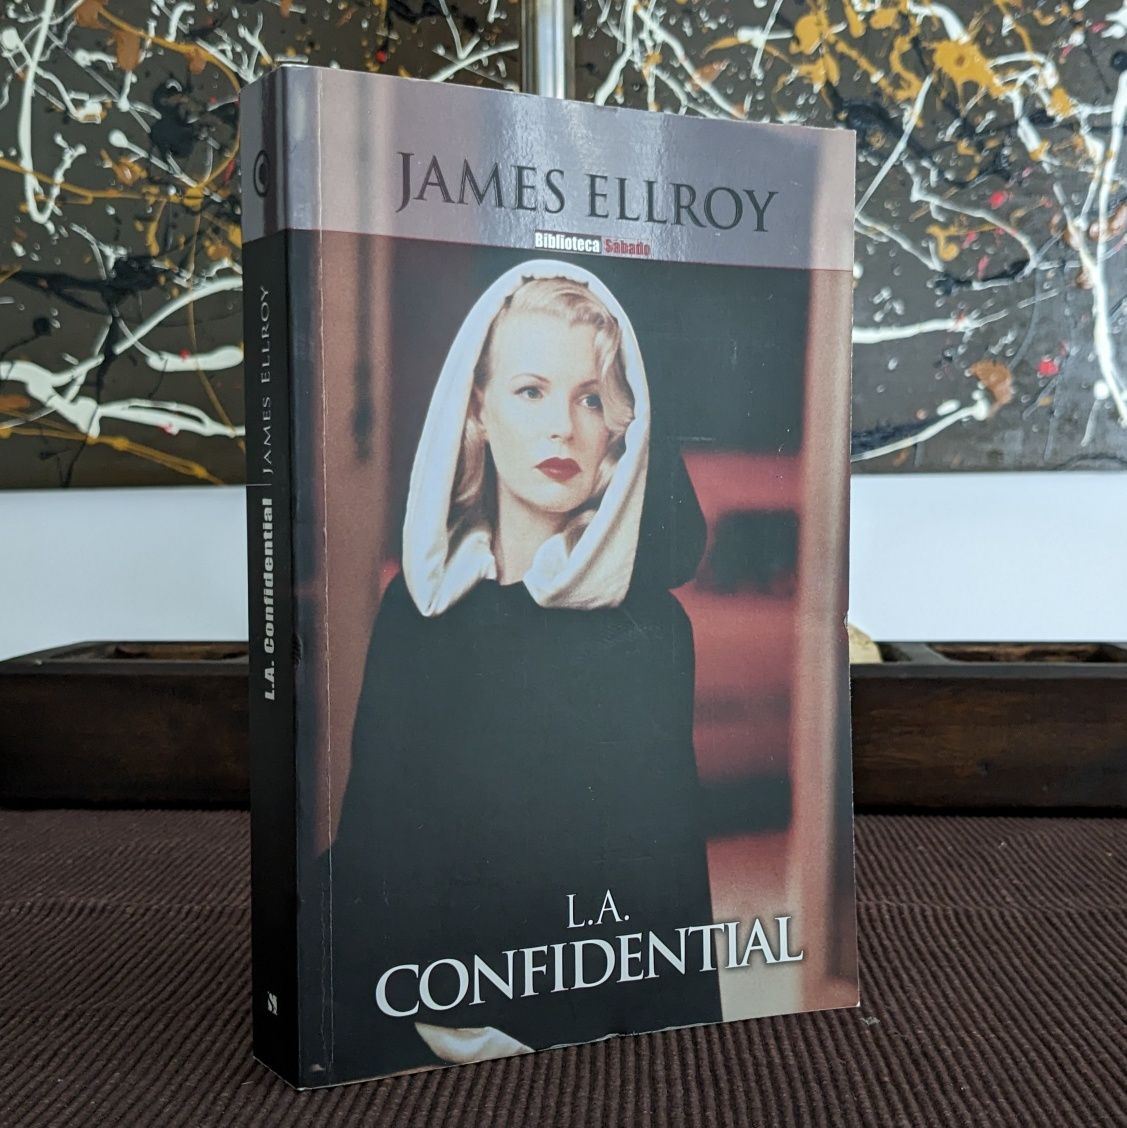 L.A. Confidential - James Elroy